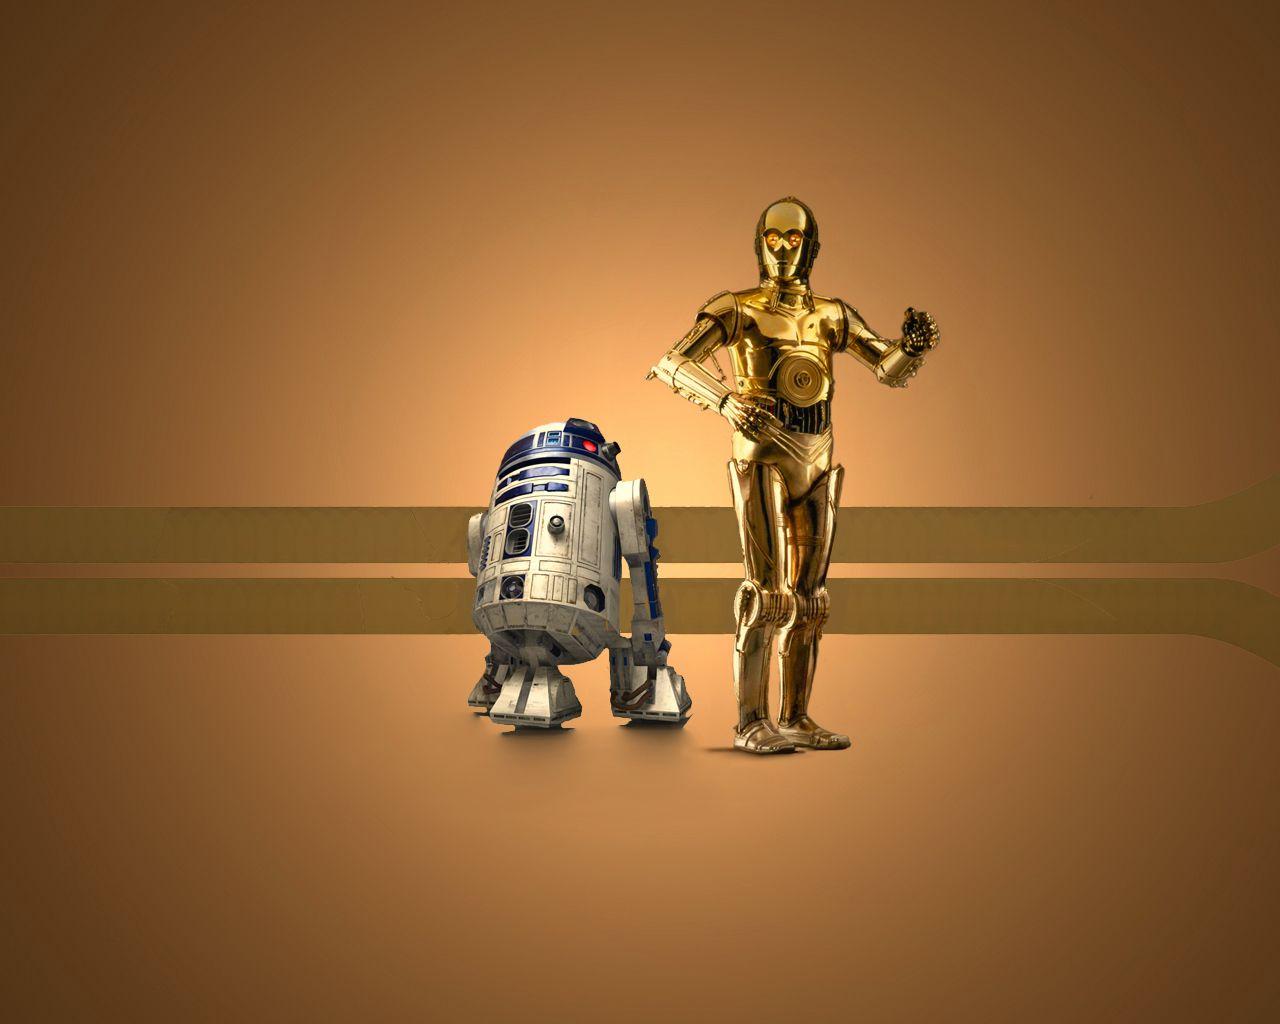 C 3PO Image C 3PO HD Wallpaper And Background Photo